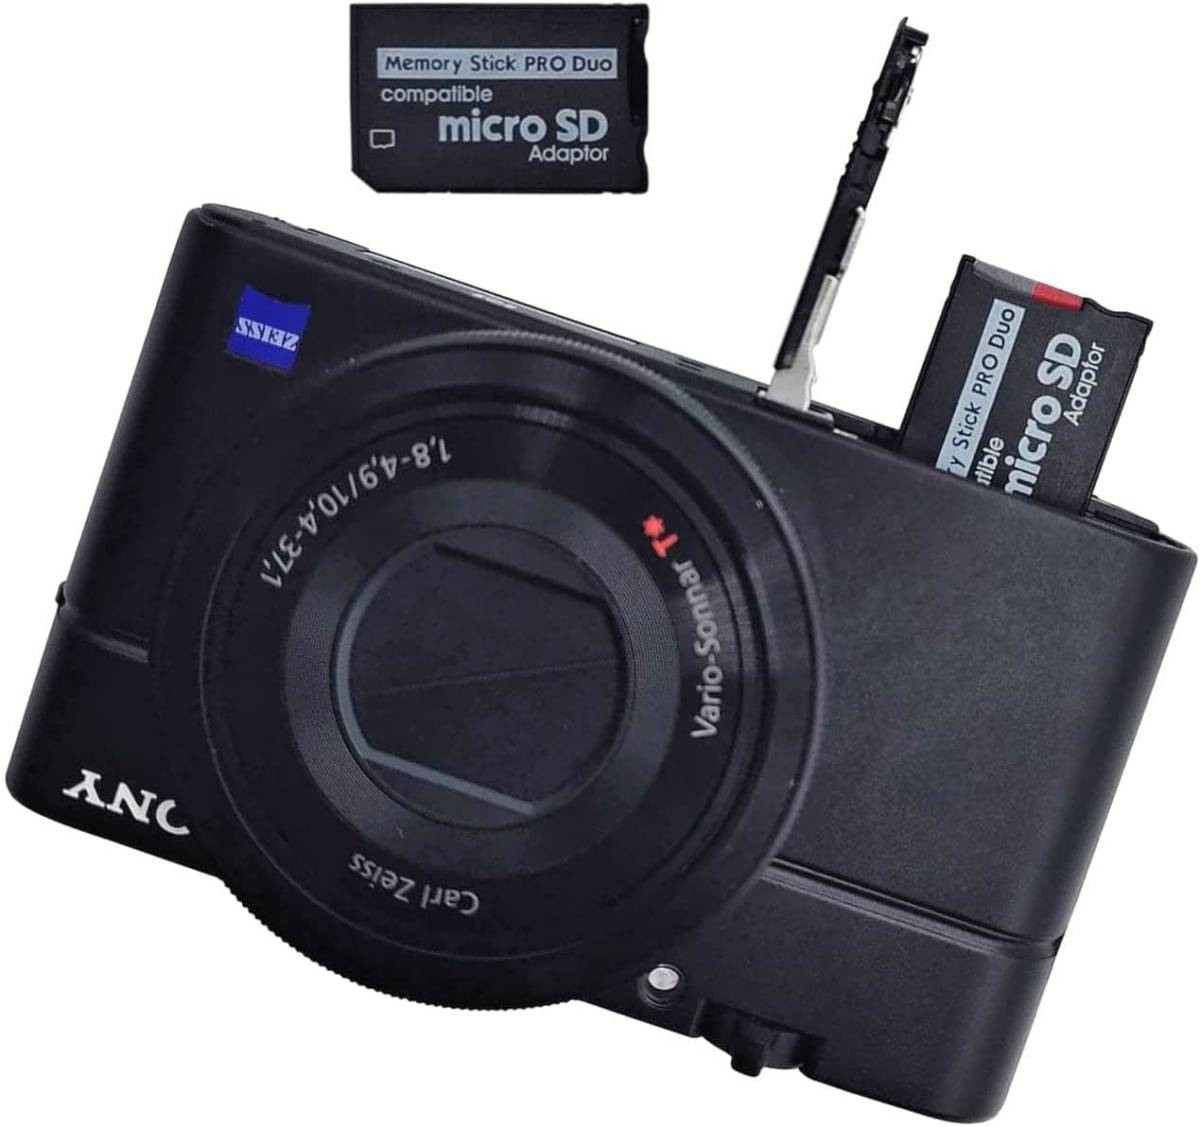  memory stick PRO Duo conversion adapter micro SD - MemoryStick PRO Duo SDHC/SDXC card correspondence 